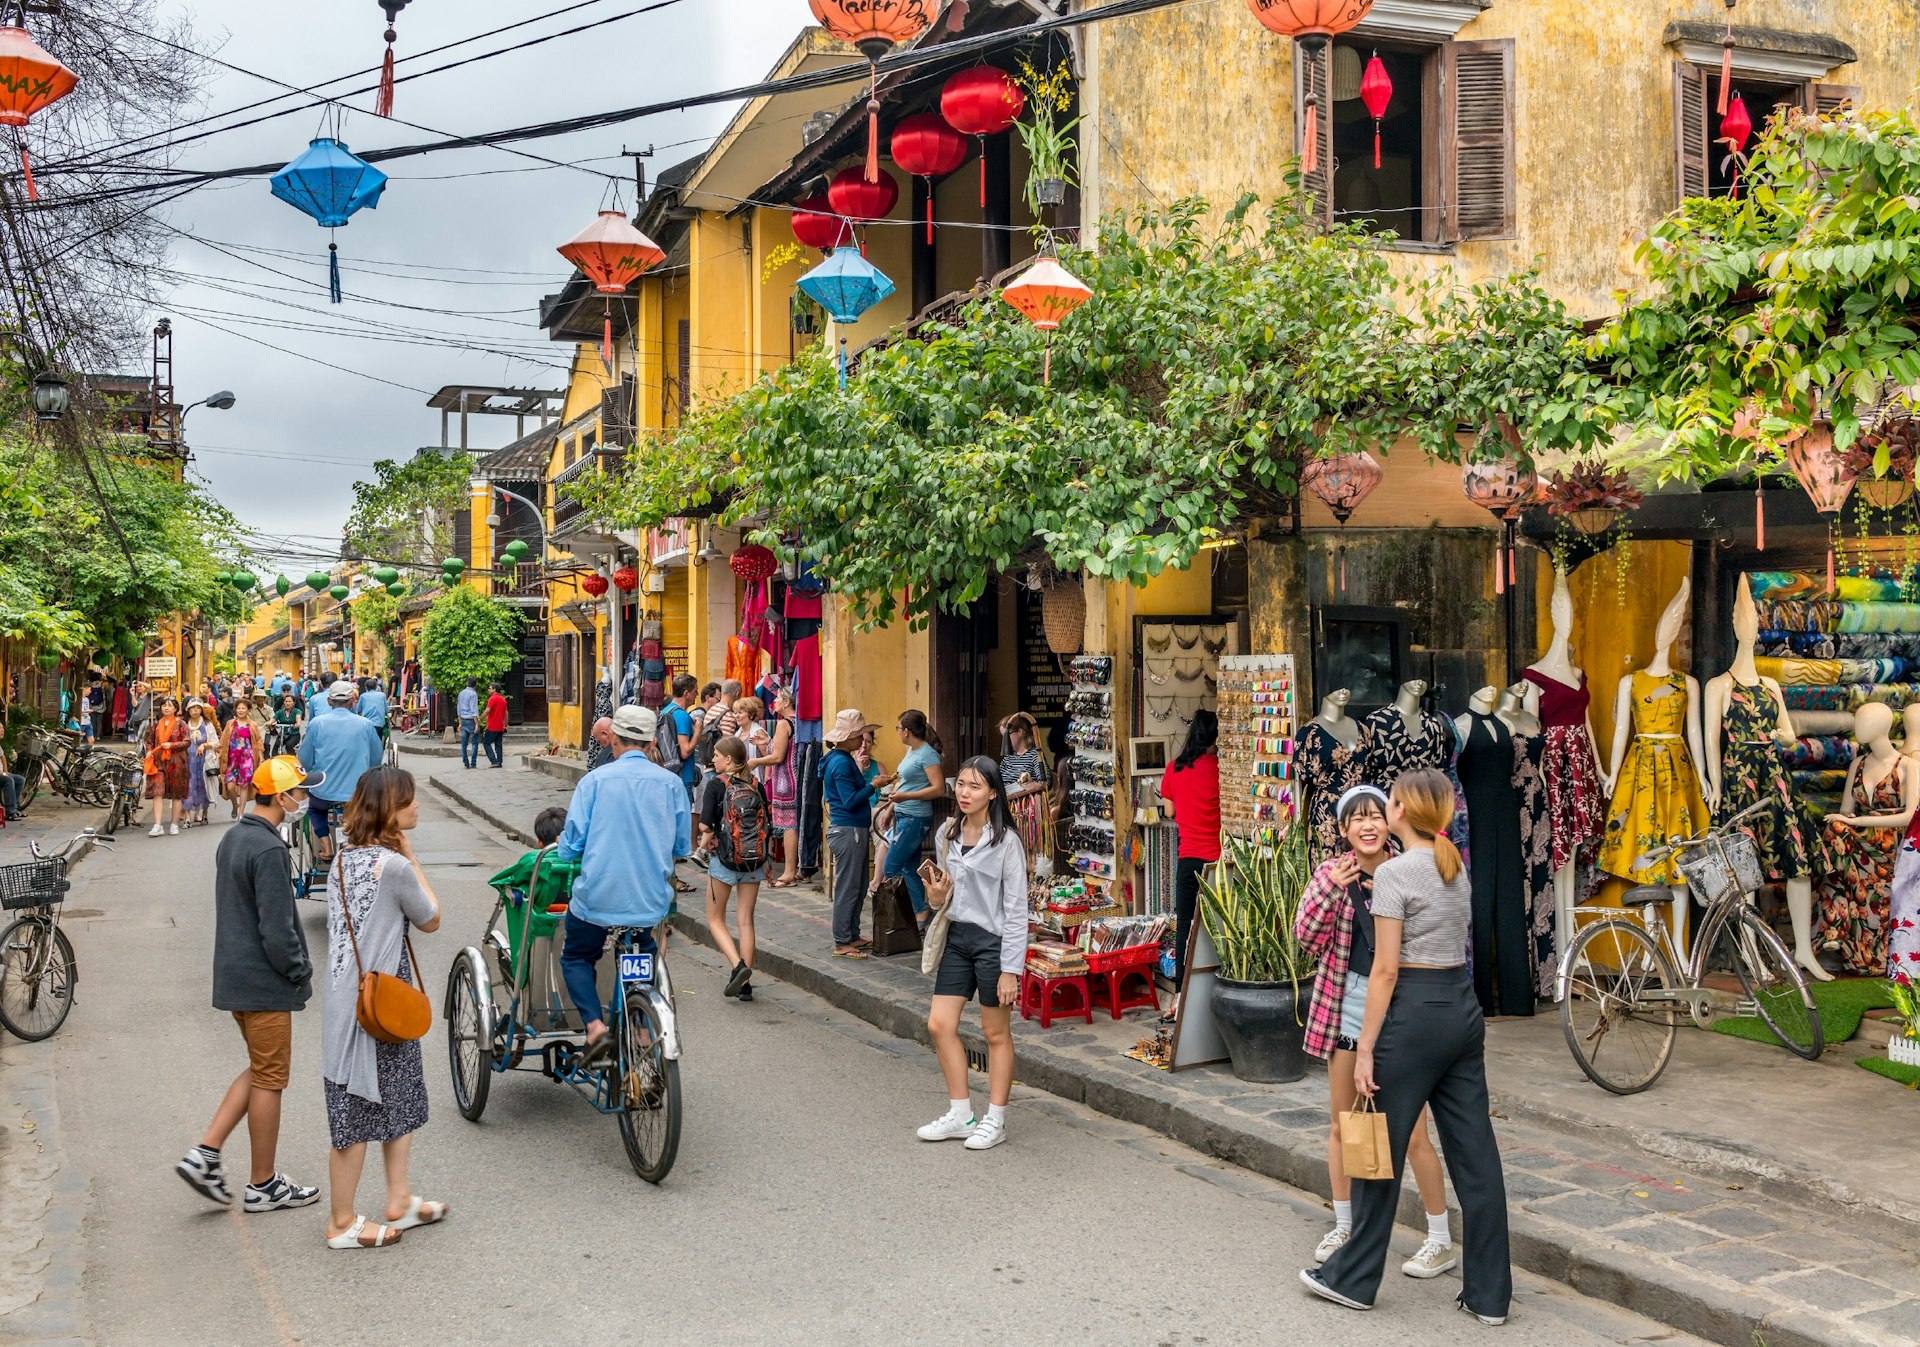 Main street in old quarter of Hoi An, Vietnam